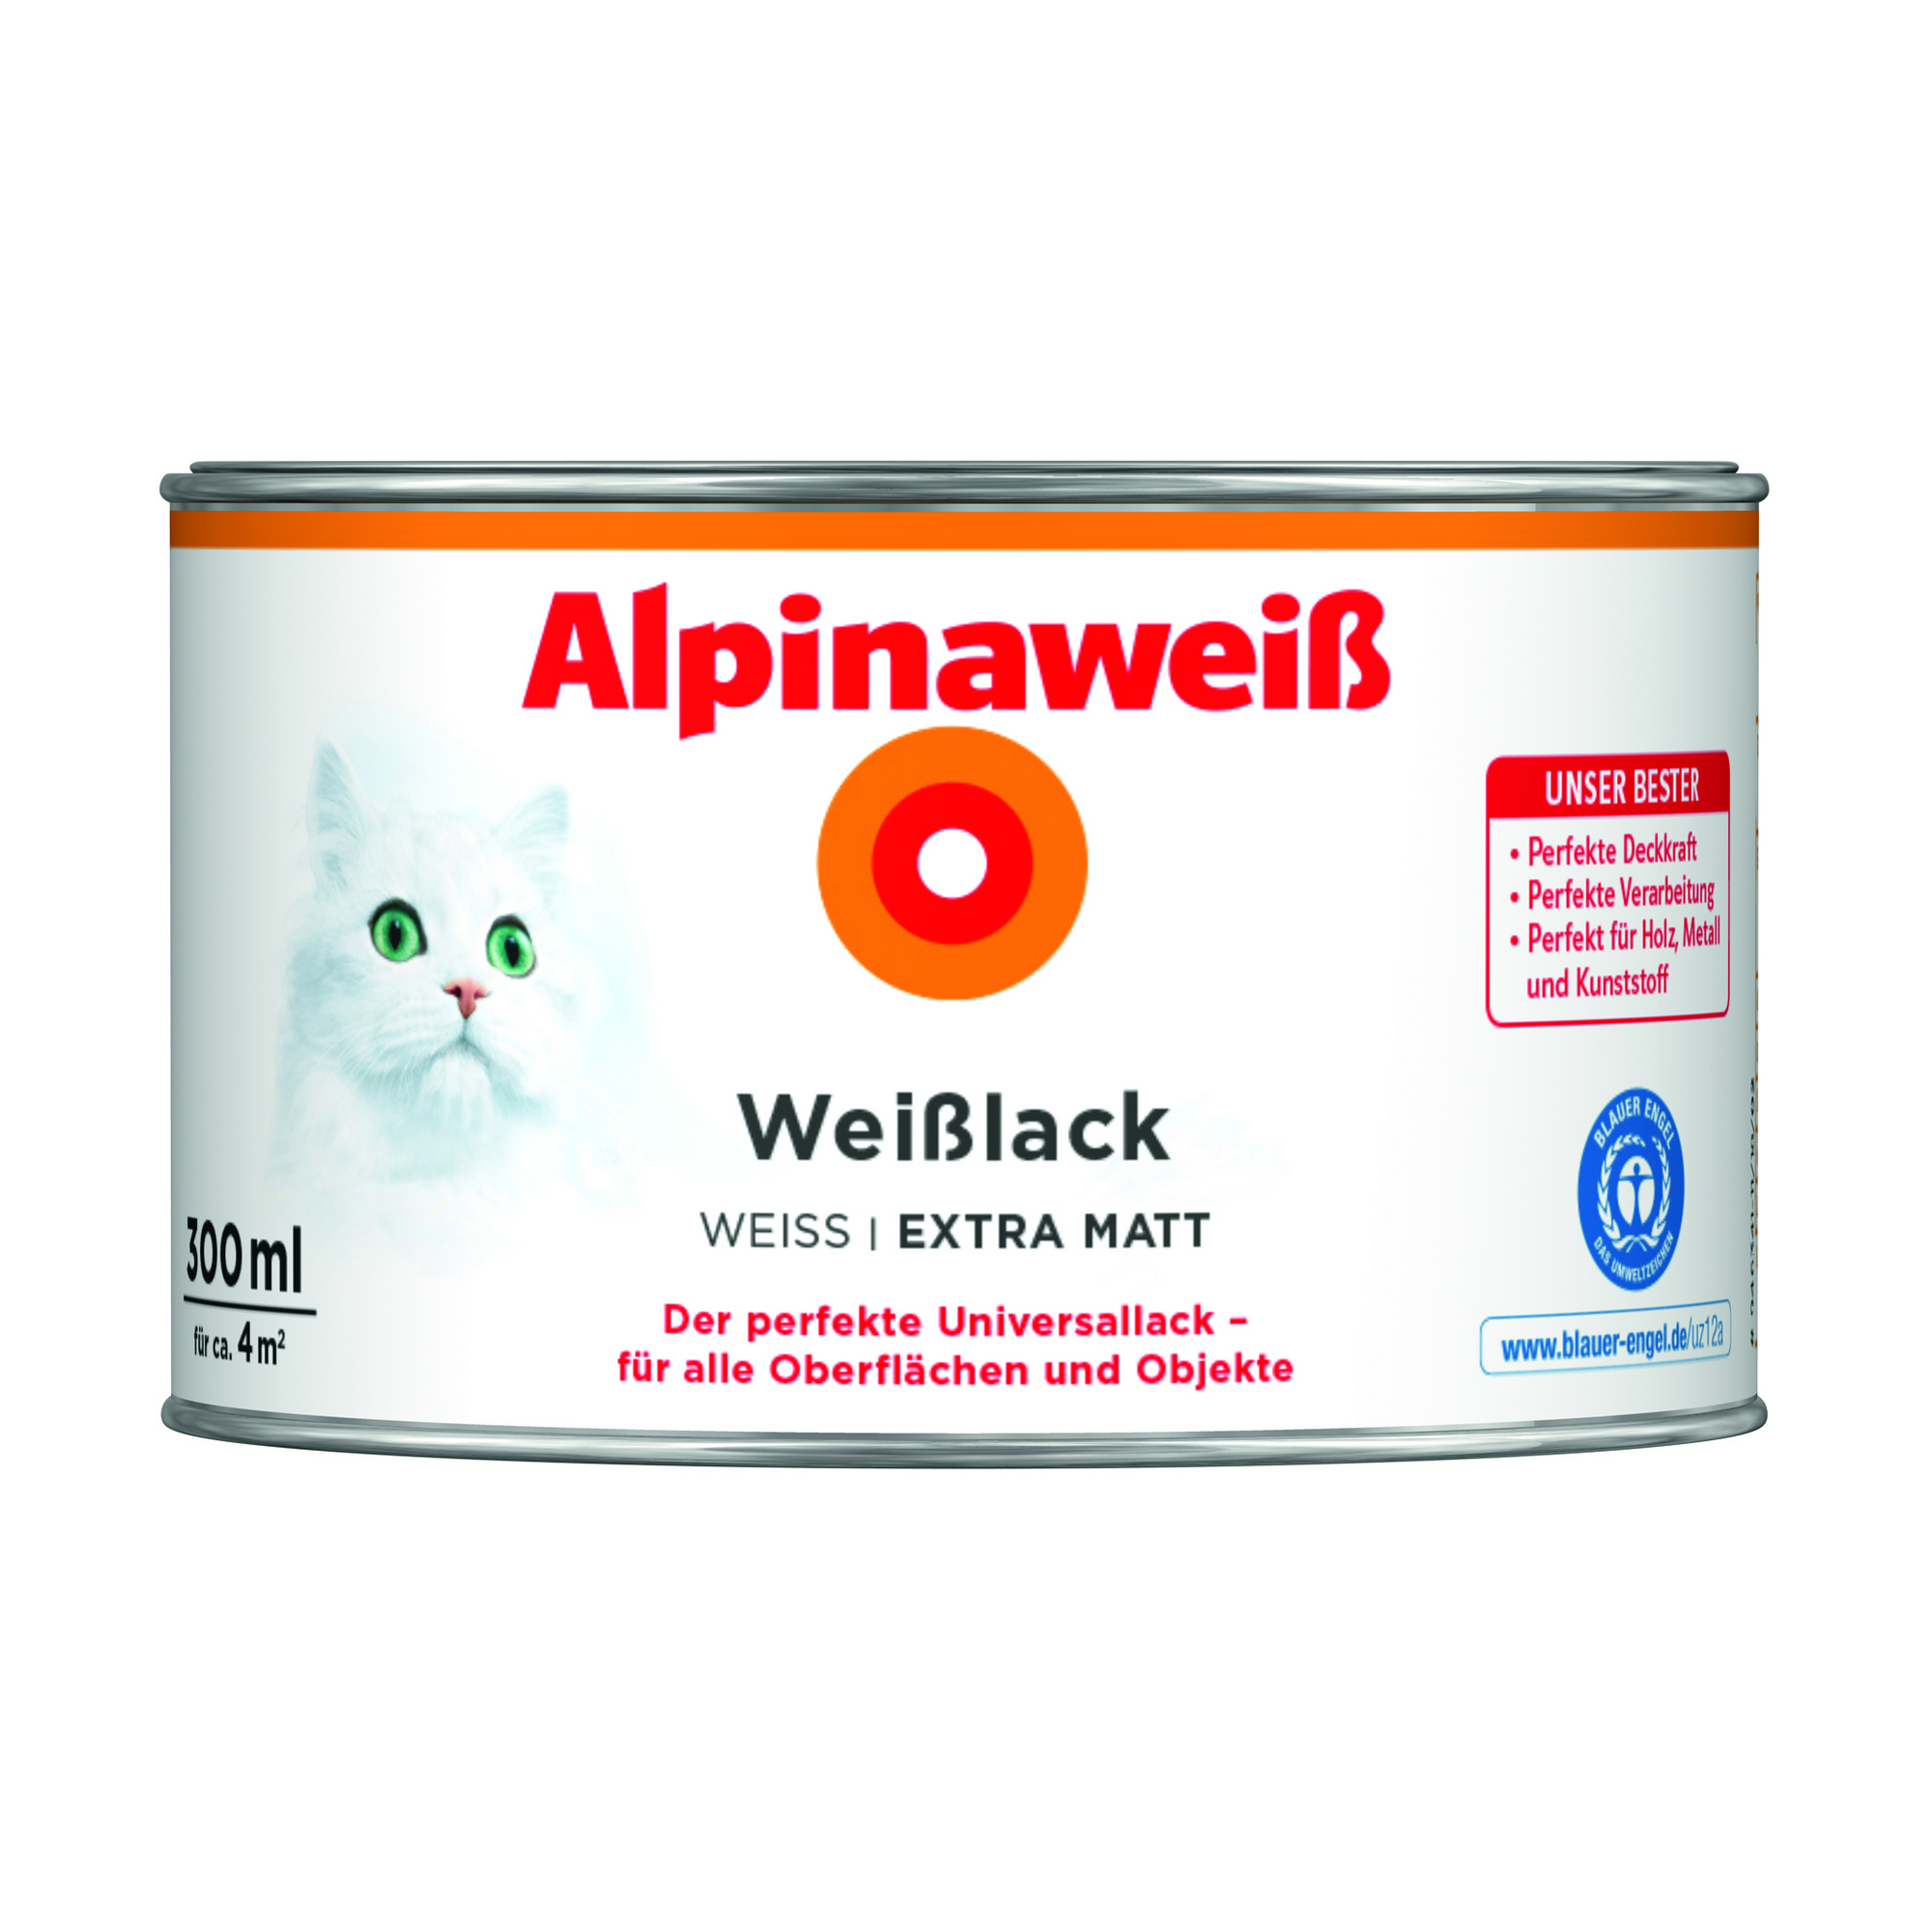 Weißlack 'Alpinaweiß' extramatt 300 ml + product picture